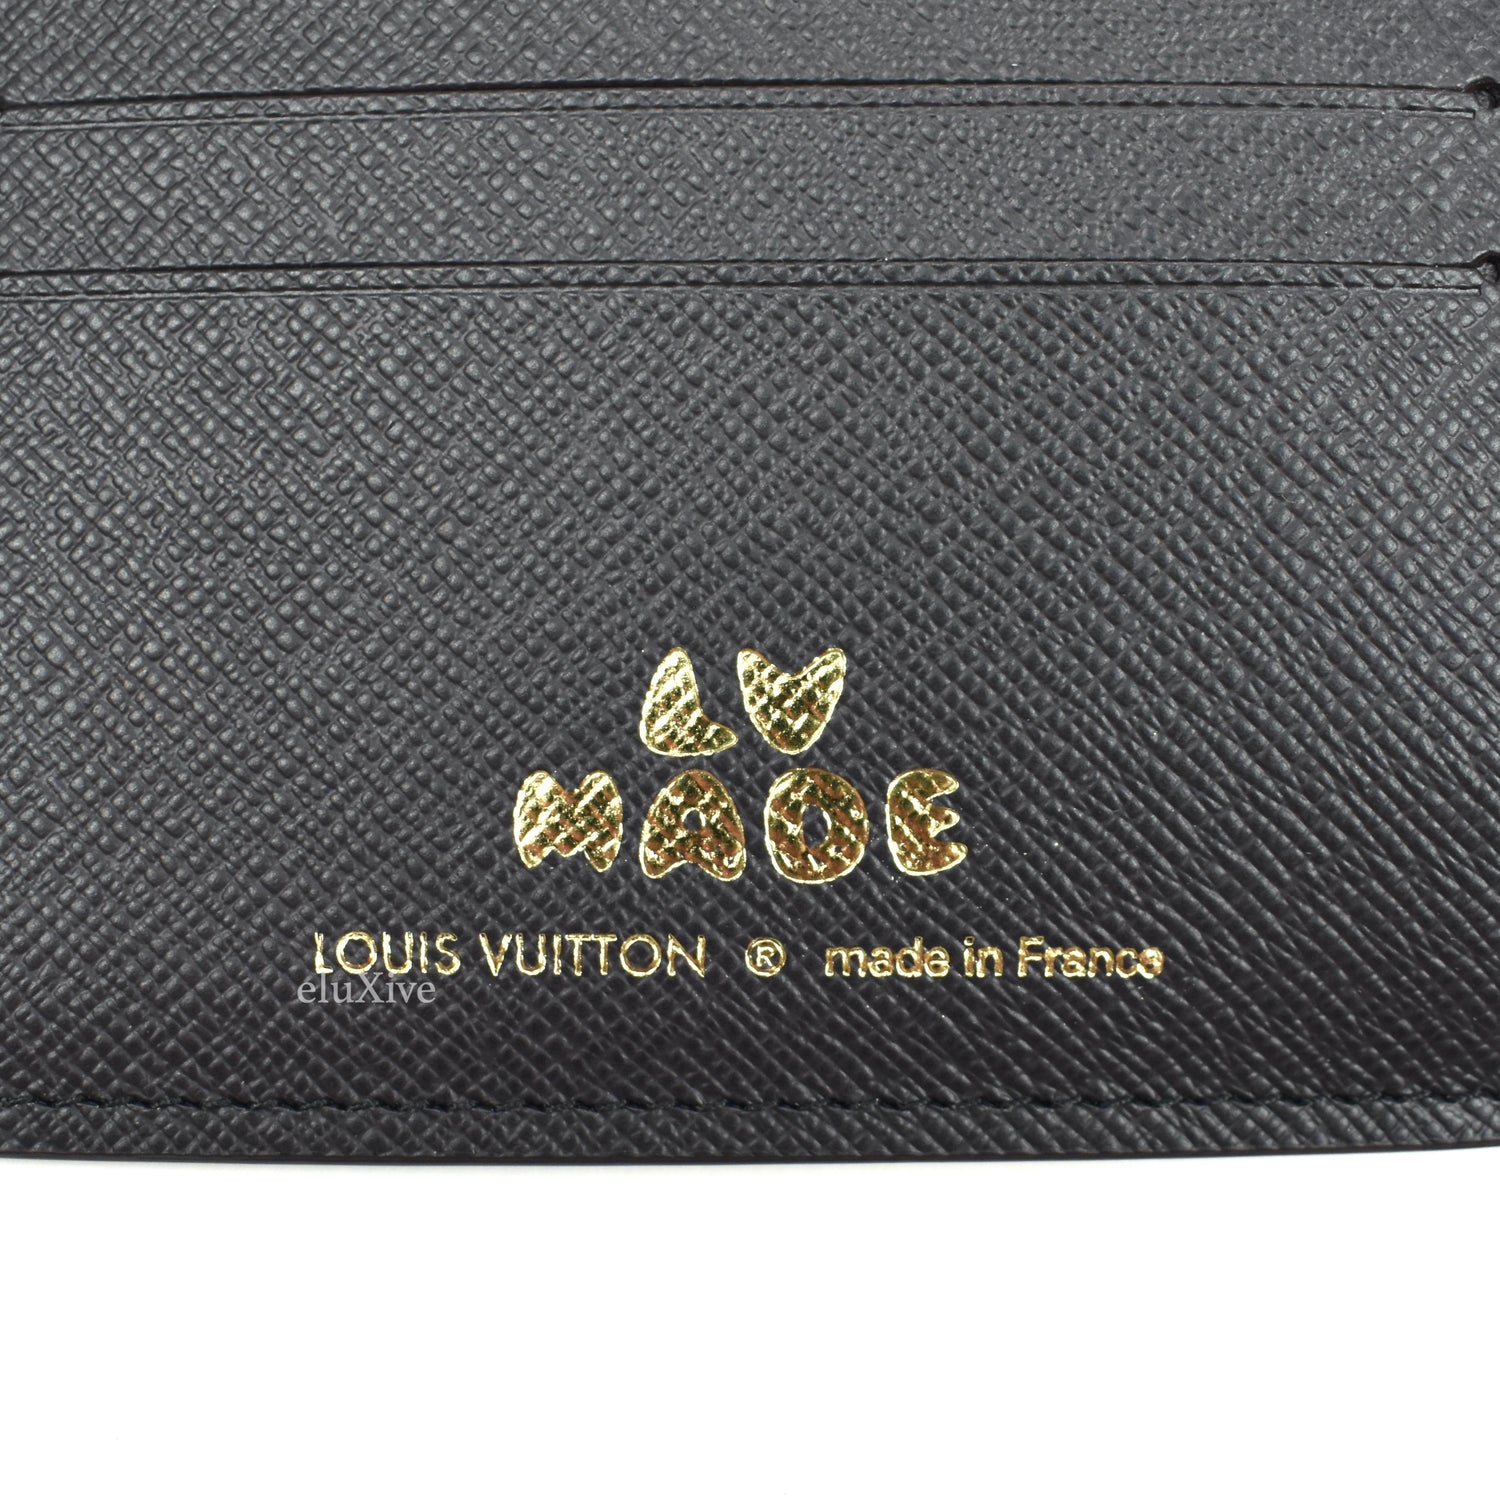 Louis Vuitton x Nigo Limited Edition Multiple Wallet w/ Tags